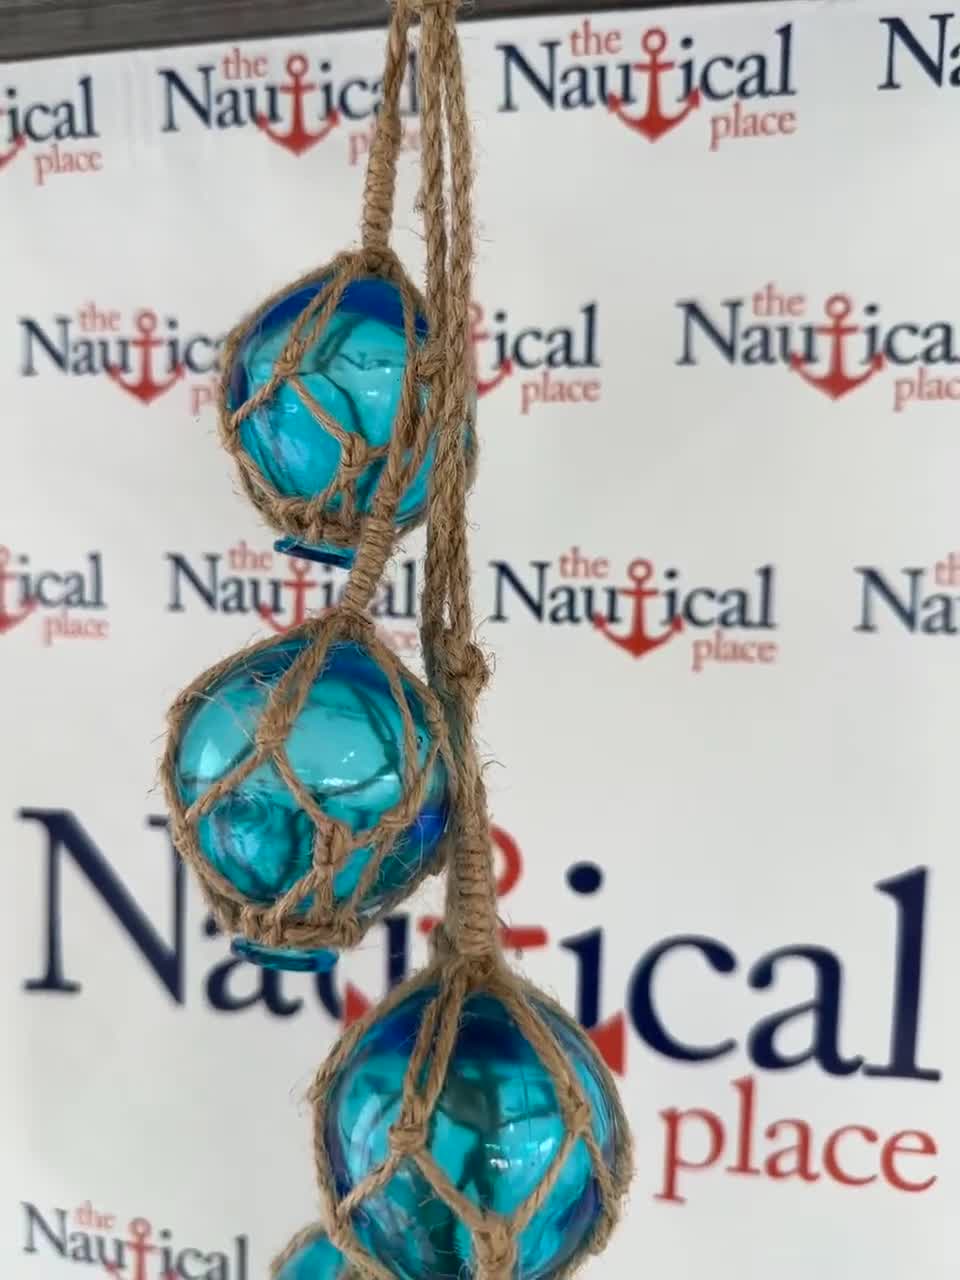 5 2 Aqua Glass Fishing Floats on Rope Nautical Fish Net Buoy Light Blue  Ball, Teal, Turquoise W/ Rope Netting Beach Decor 